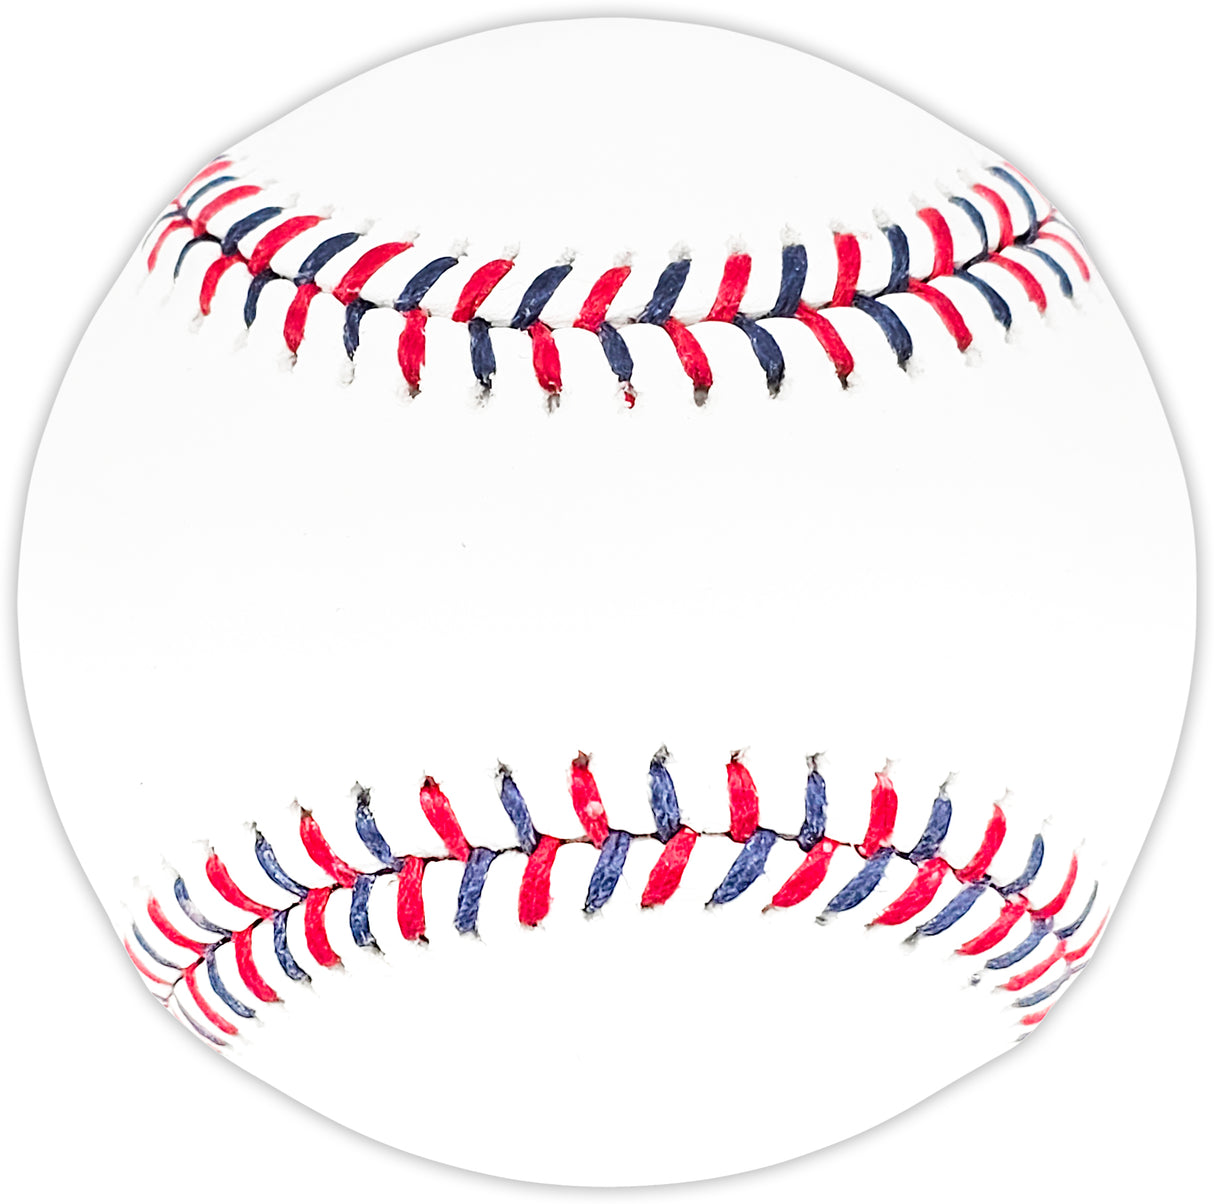 Ronald Acuna Jr. Autographed Official 2019 All-Star Game Baseball Atlanta Braves Beckett BAS Stock #178981